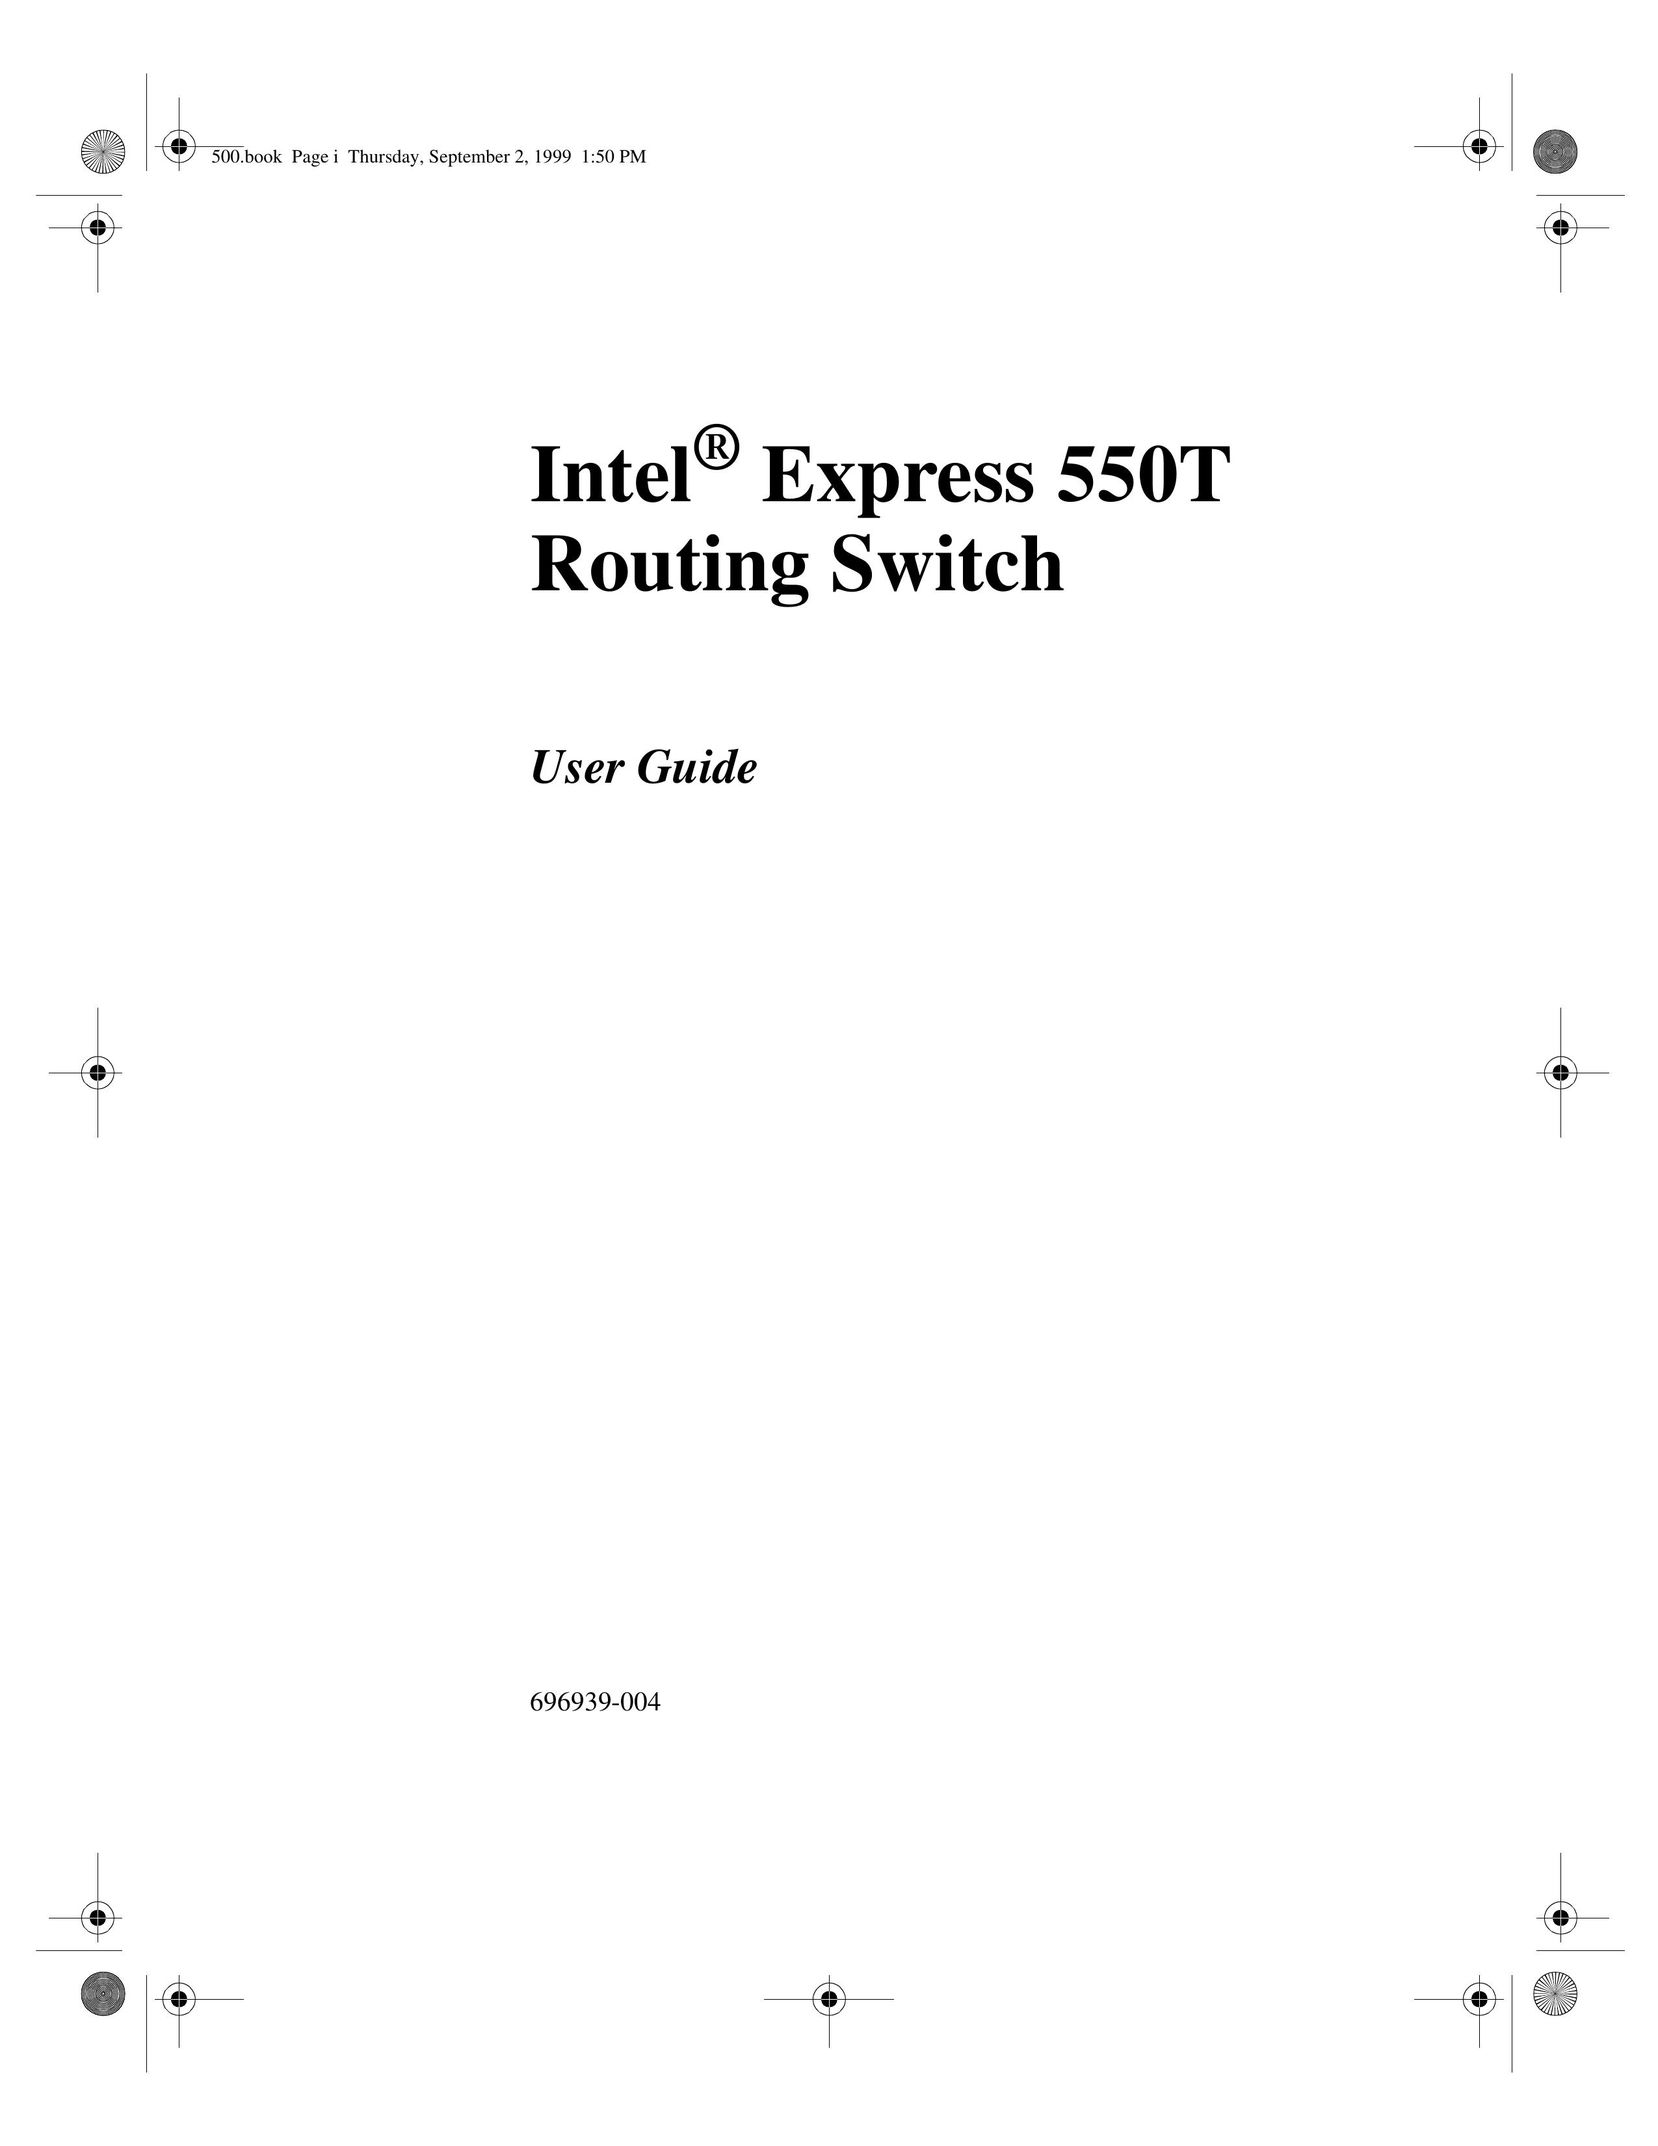 Intel 550T Switch User Manual